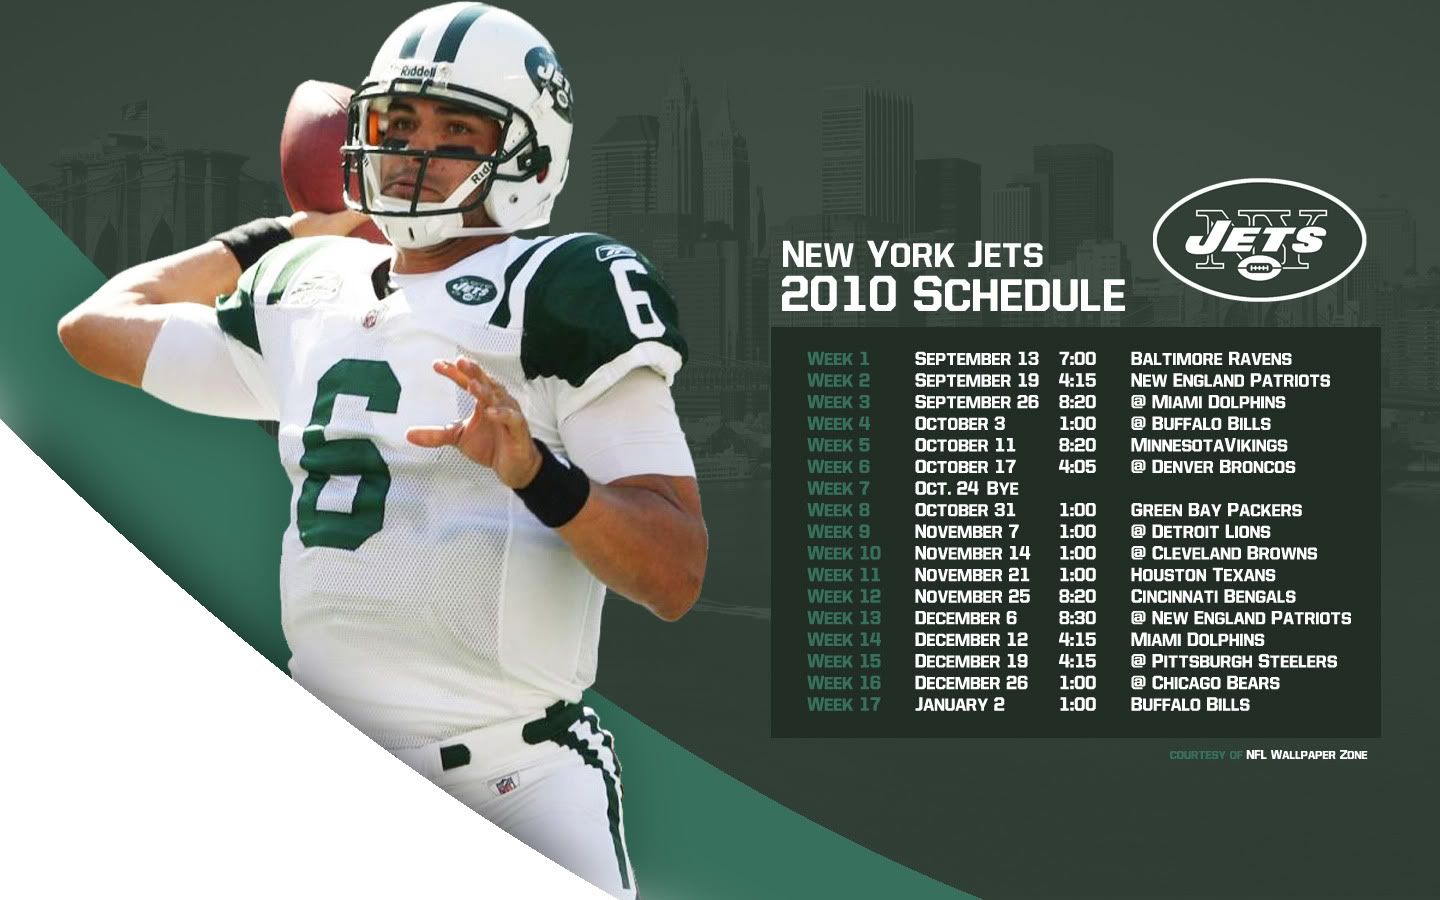 Jets2010ScheduleWallpaper.jpg New York Jets 2010 Schedule Wallpaper